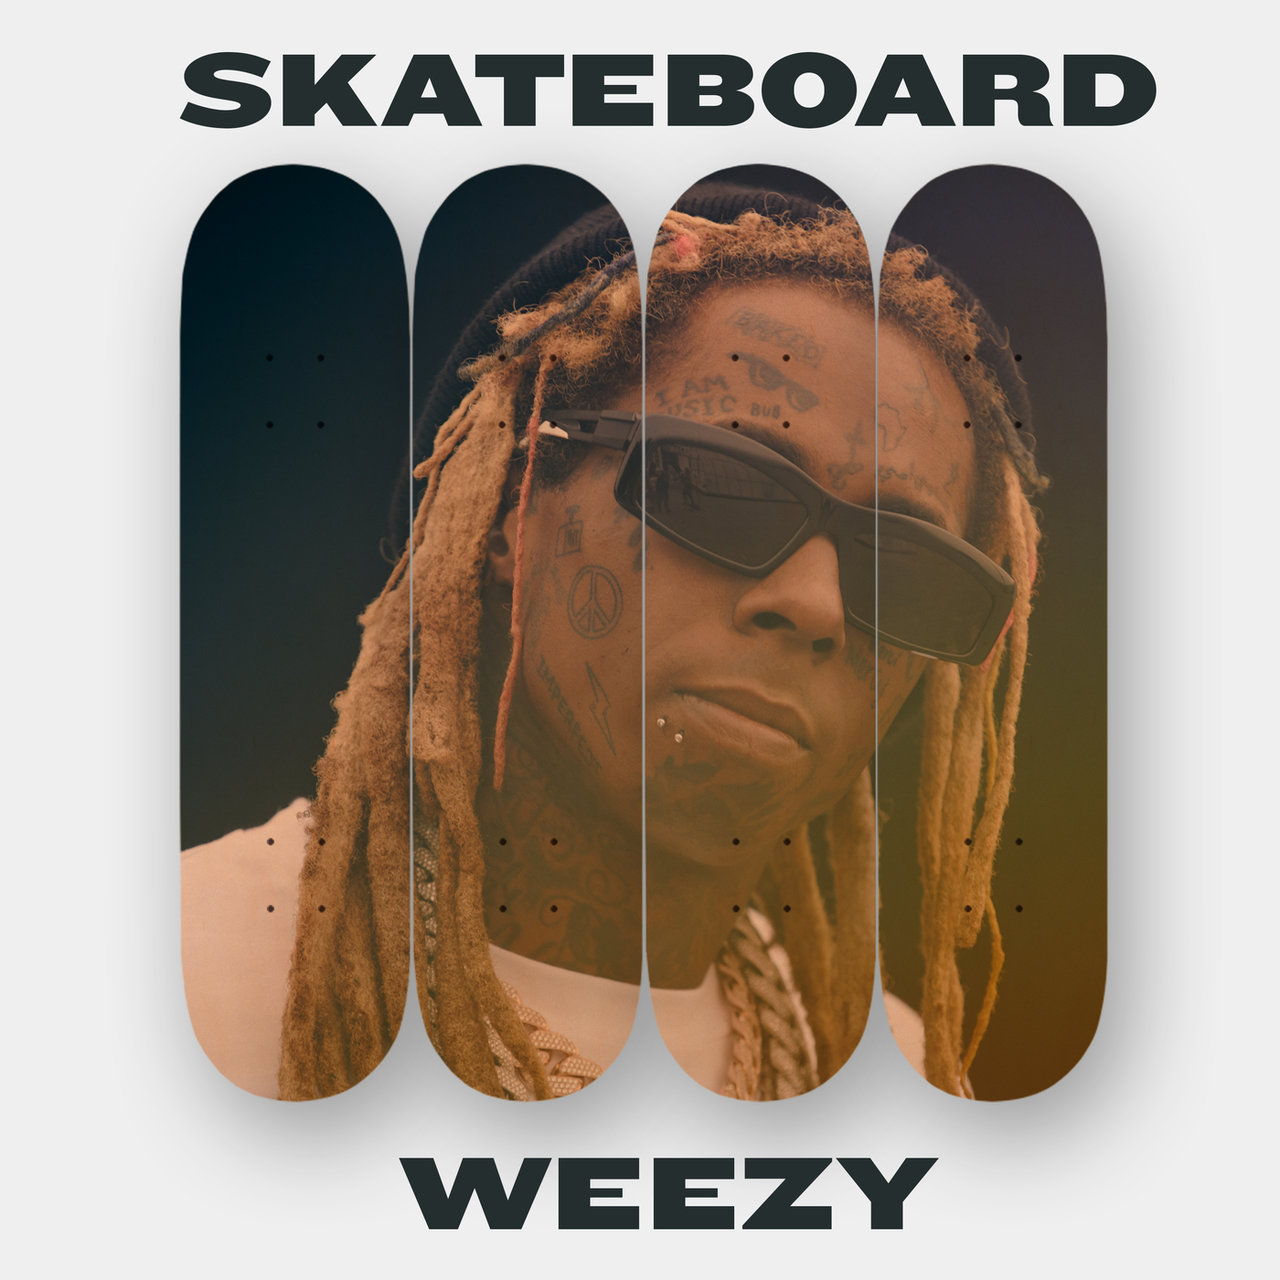 Lil Wayne - Skateboard Weezy (Cover)